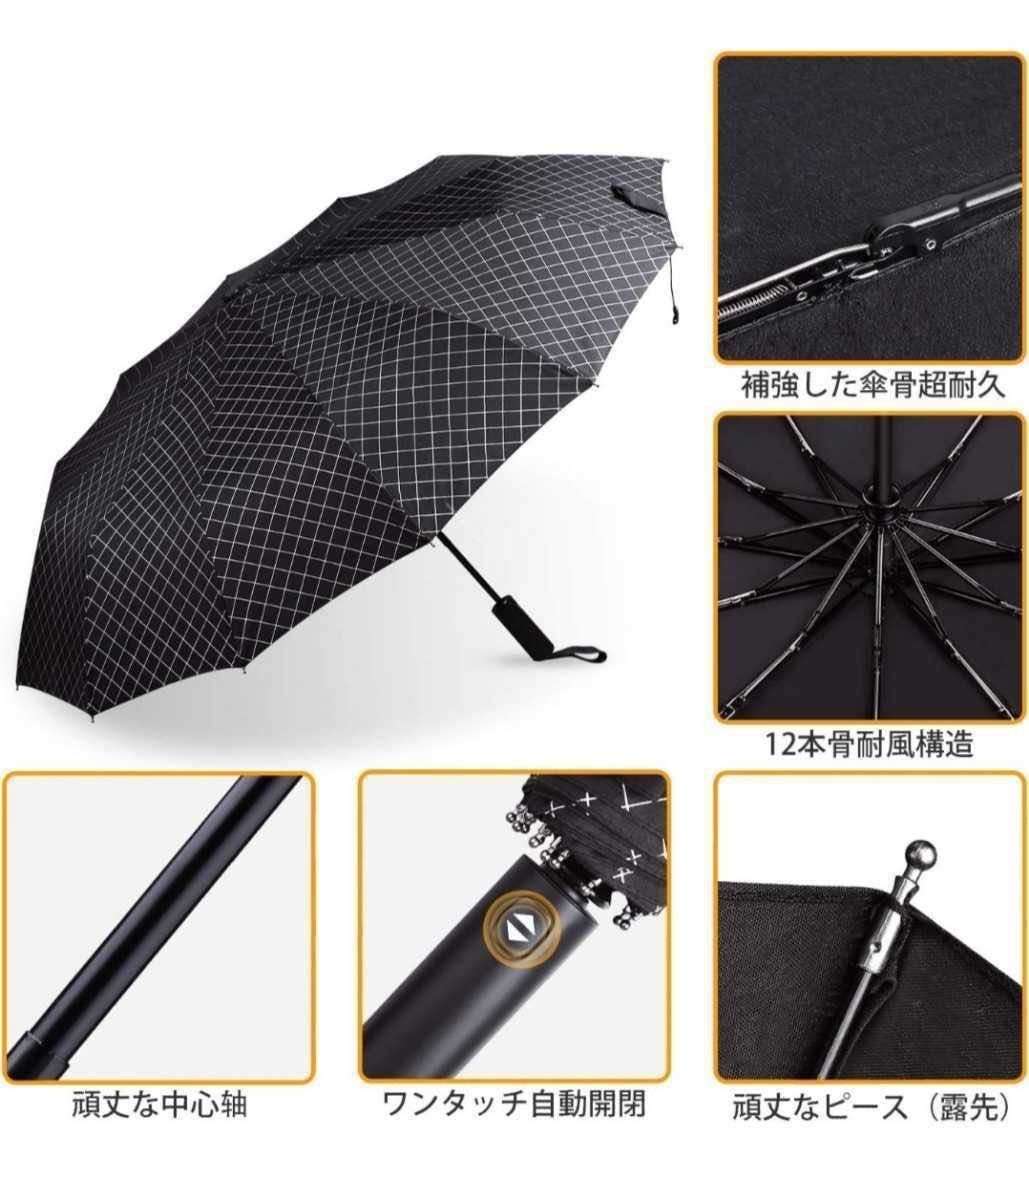 「E516K-黒線傘」晴雨兼用 折りたたみ傘 AISITIN 12本骨 傘 ワンタッチ自動開閉 折り畳み傘 雨傘 軽量 日傘 収納ポーチ付き (ブラック)の画像2